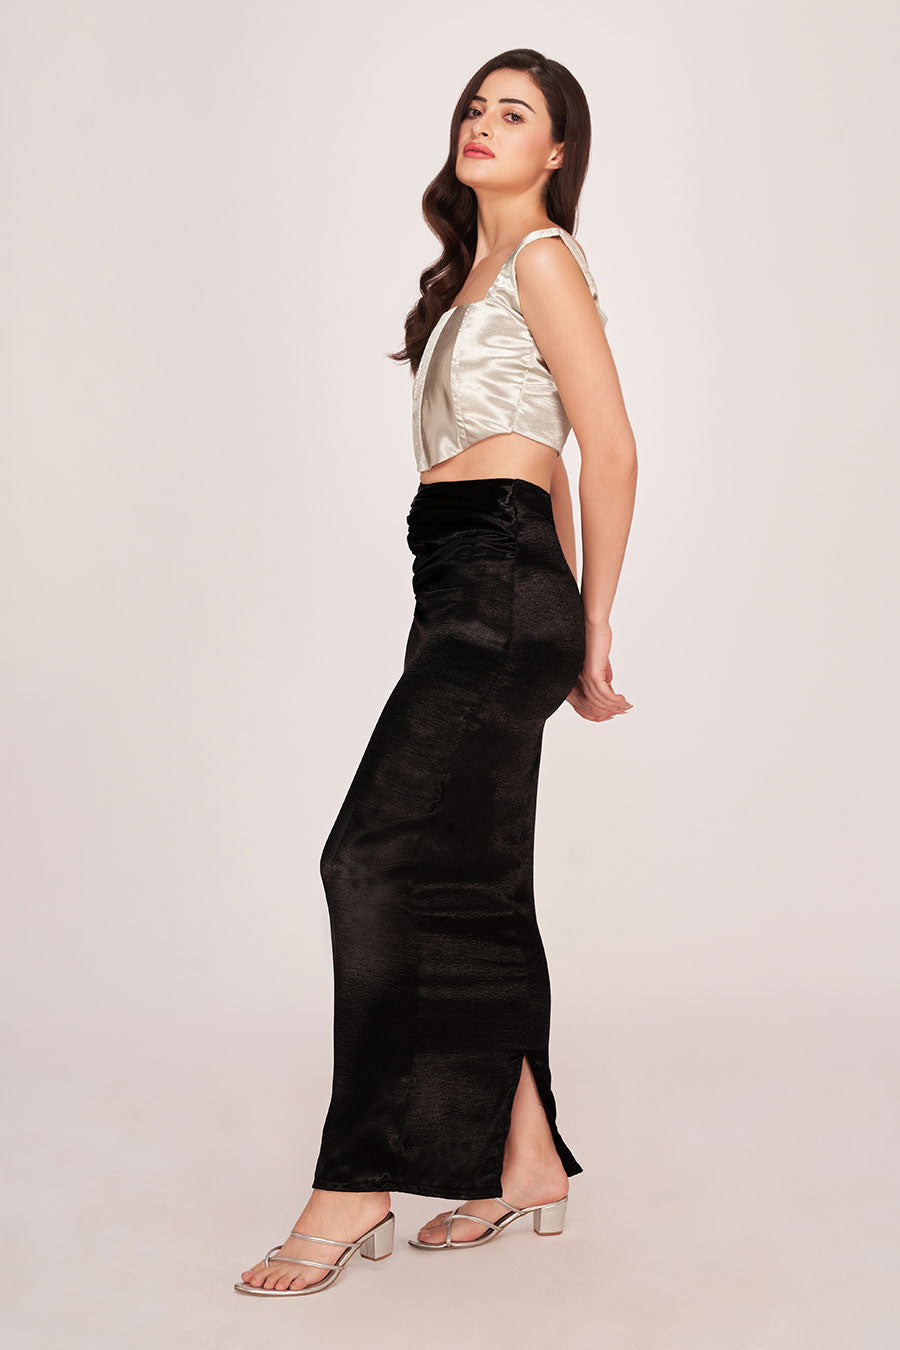 Silver Crop Top & Black Long Skirt Co-Ord Set